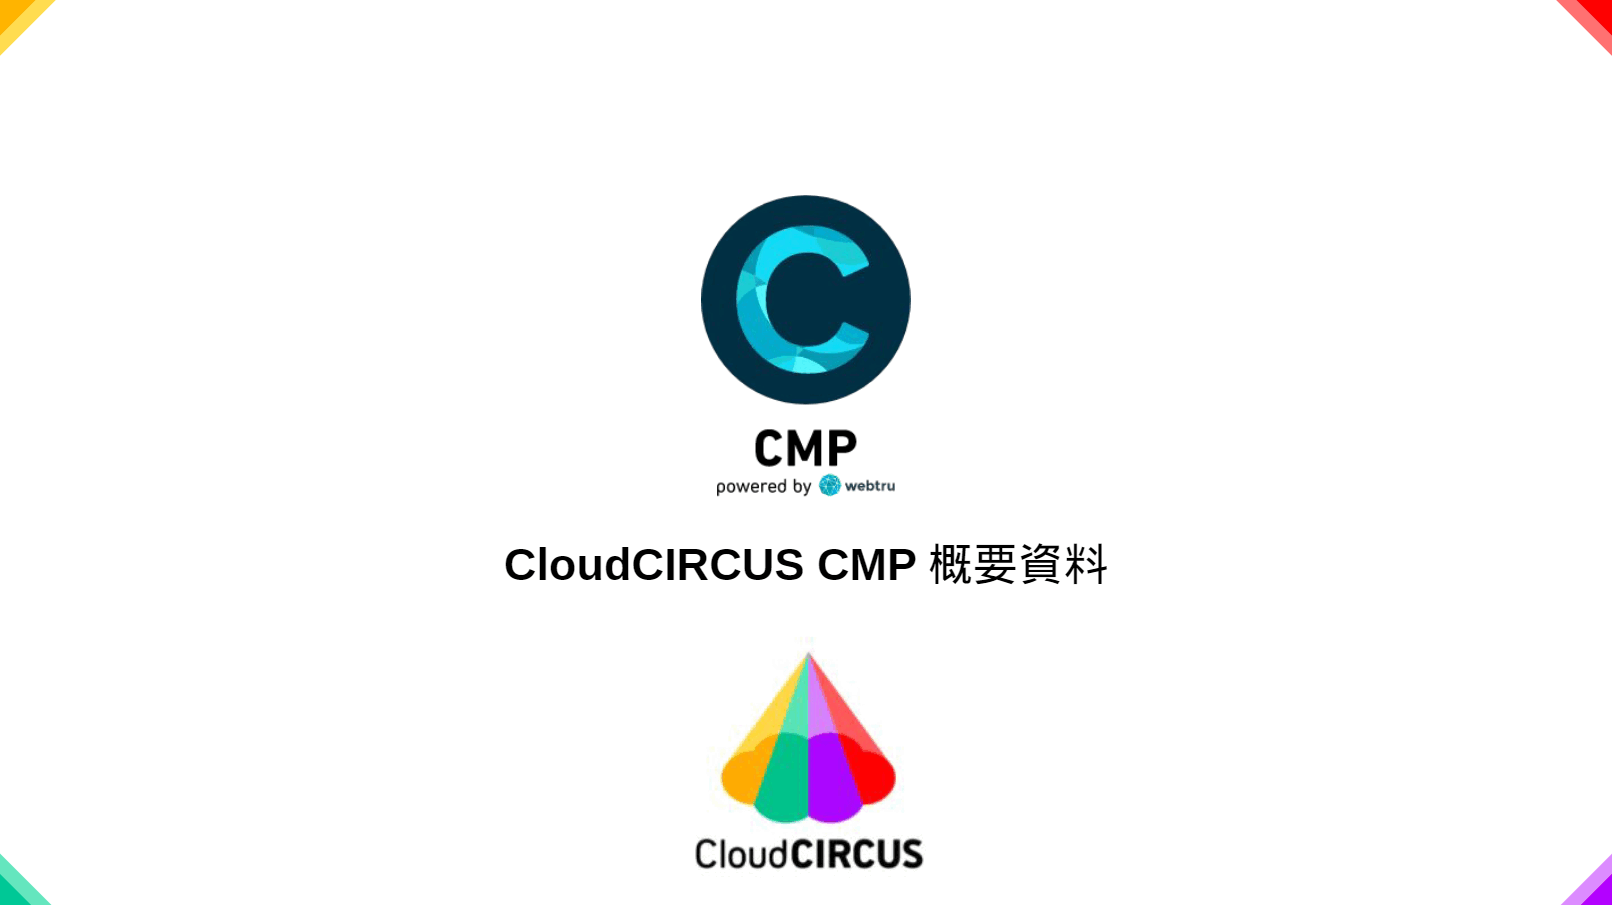 Cloud CIRCUSサービス一覧資料